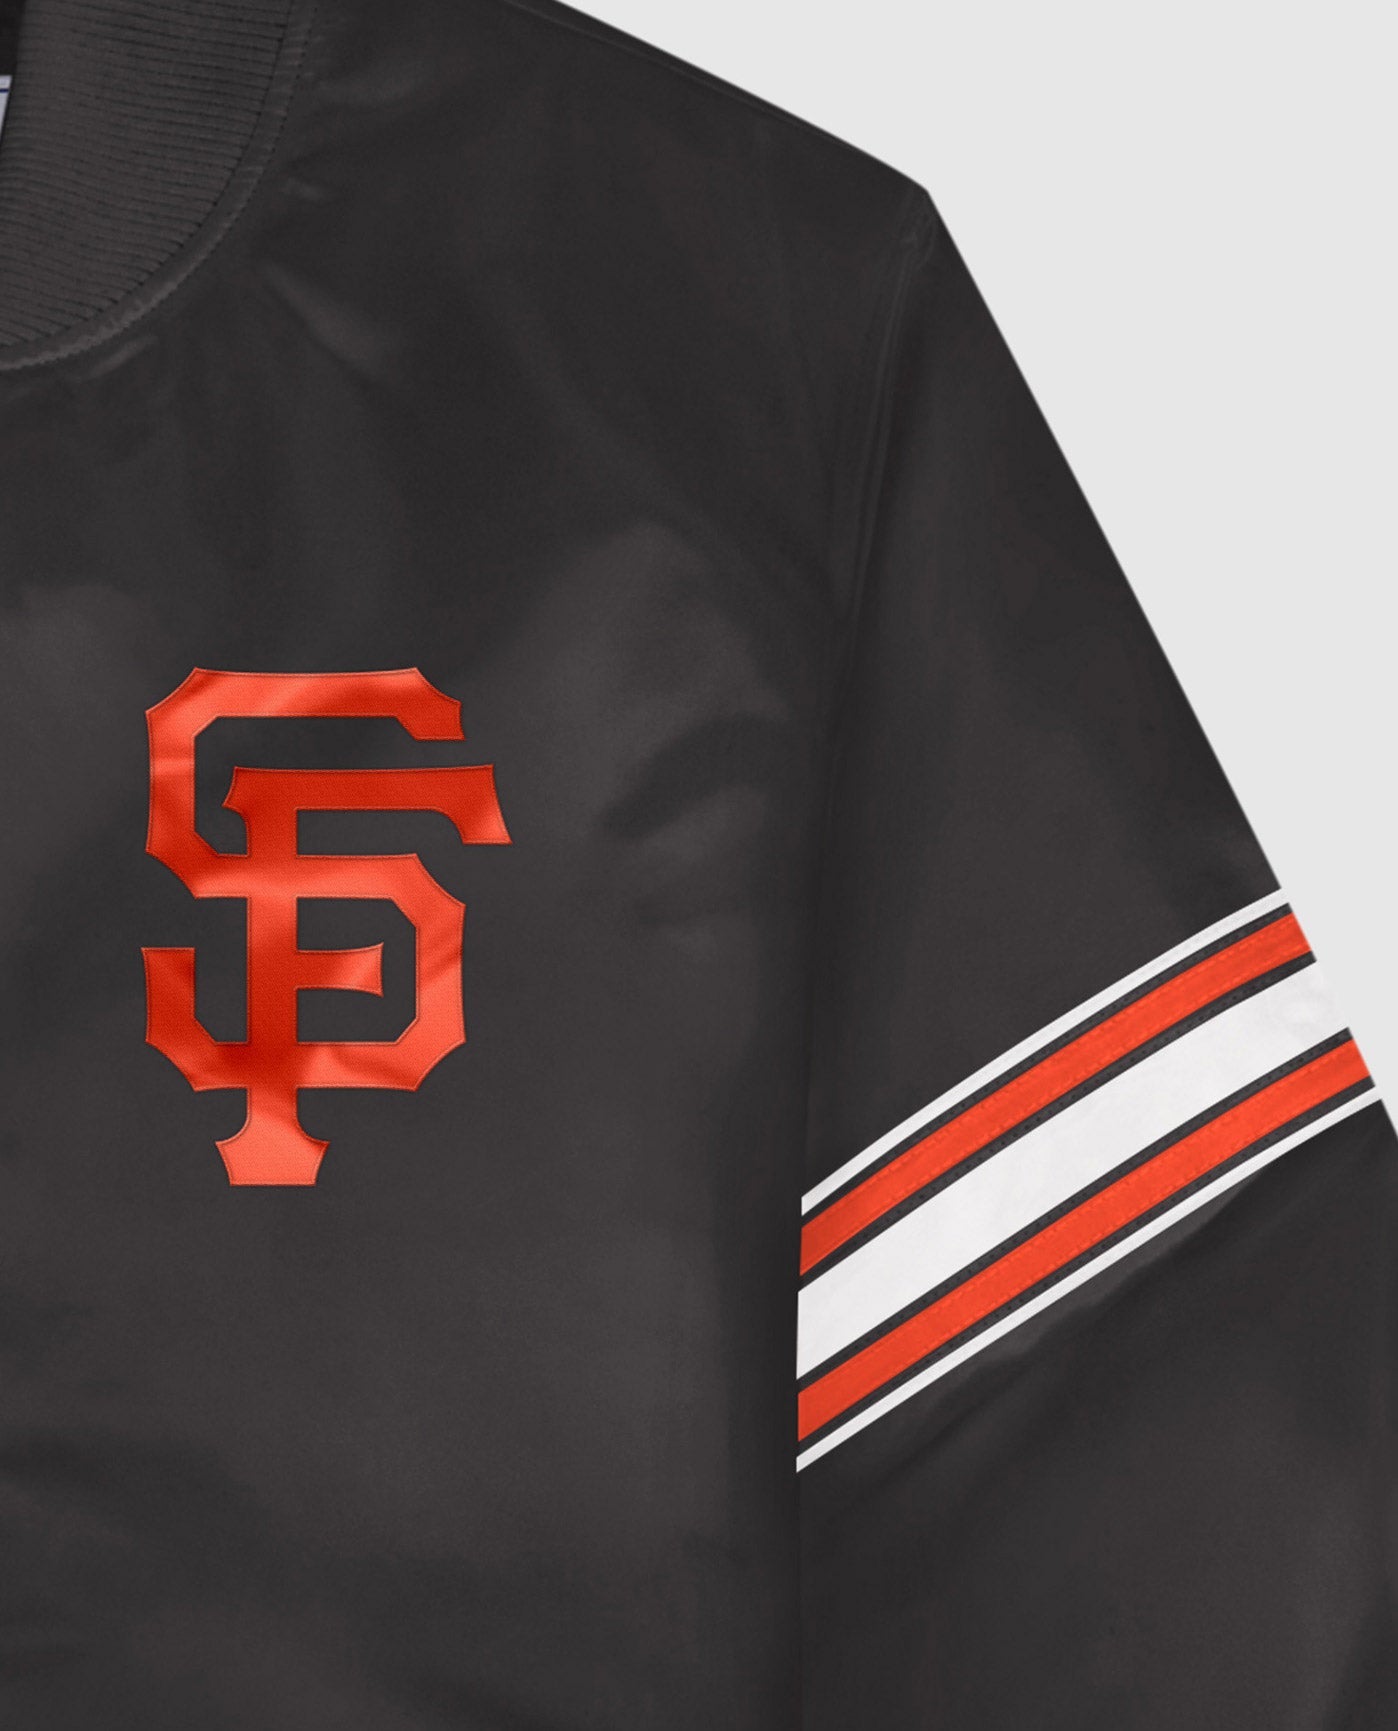 San Francisco Giants Twill Applique Logo And Color Stripe Sleeve | Black